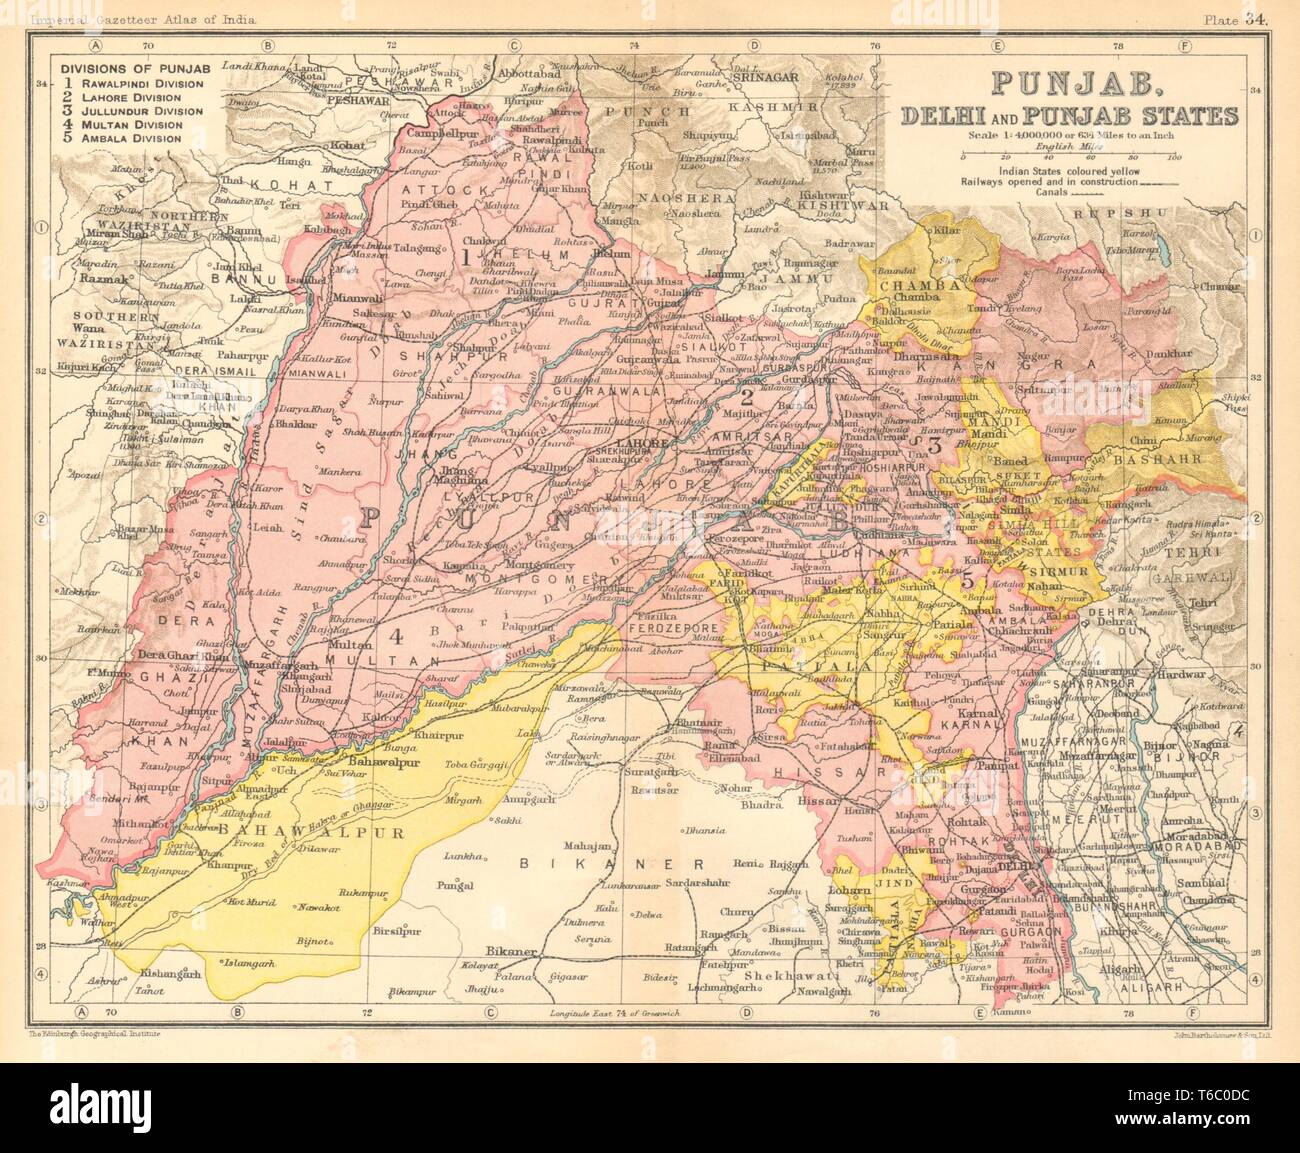 Punjab. British India/Pakistan province. Haryana Himachal Pradesh Delhi 1931 map Stock Photo